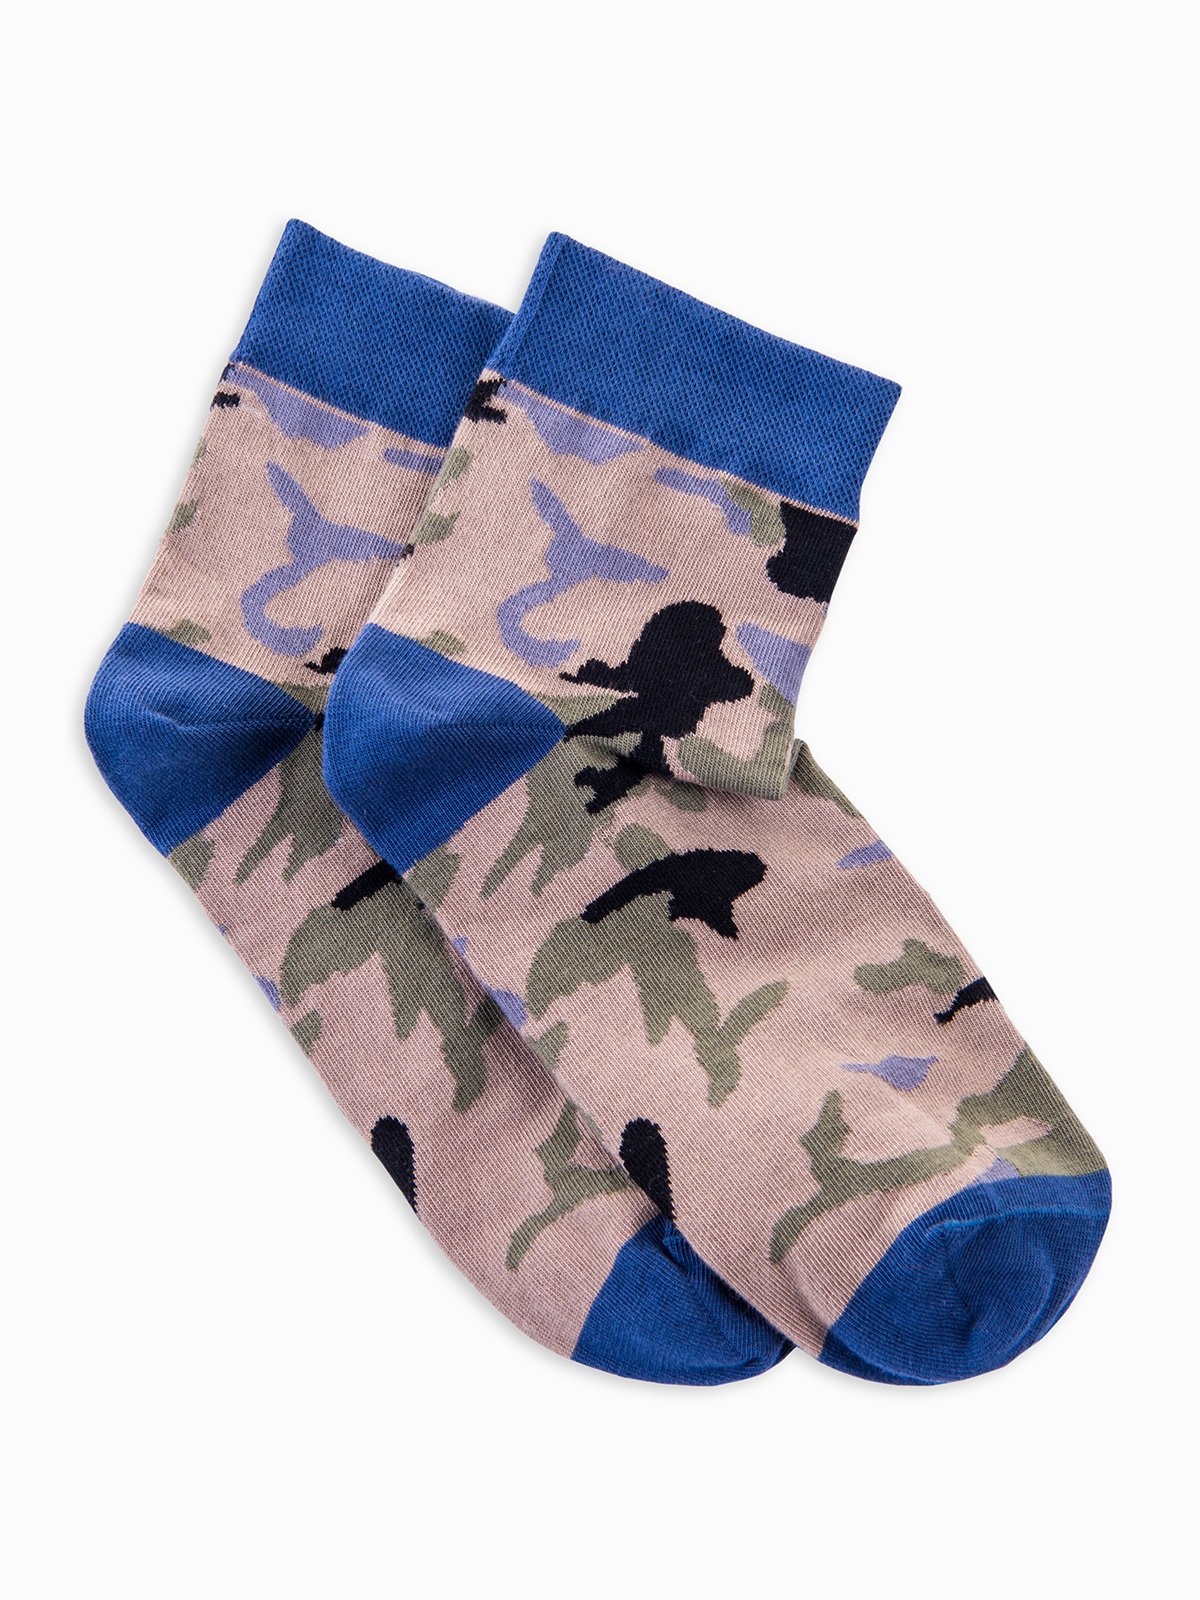 Men's socks U10 - blue-camo | MODONE wholesale - Clothing For Men